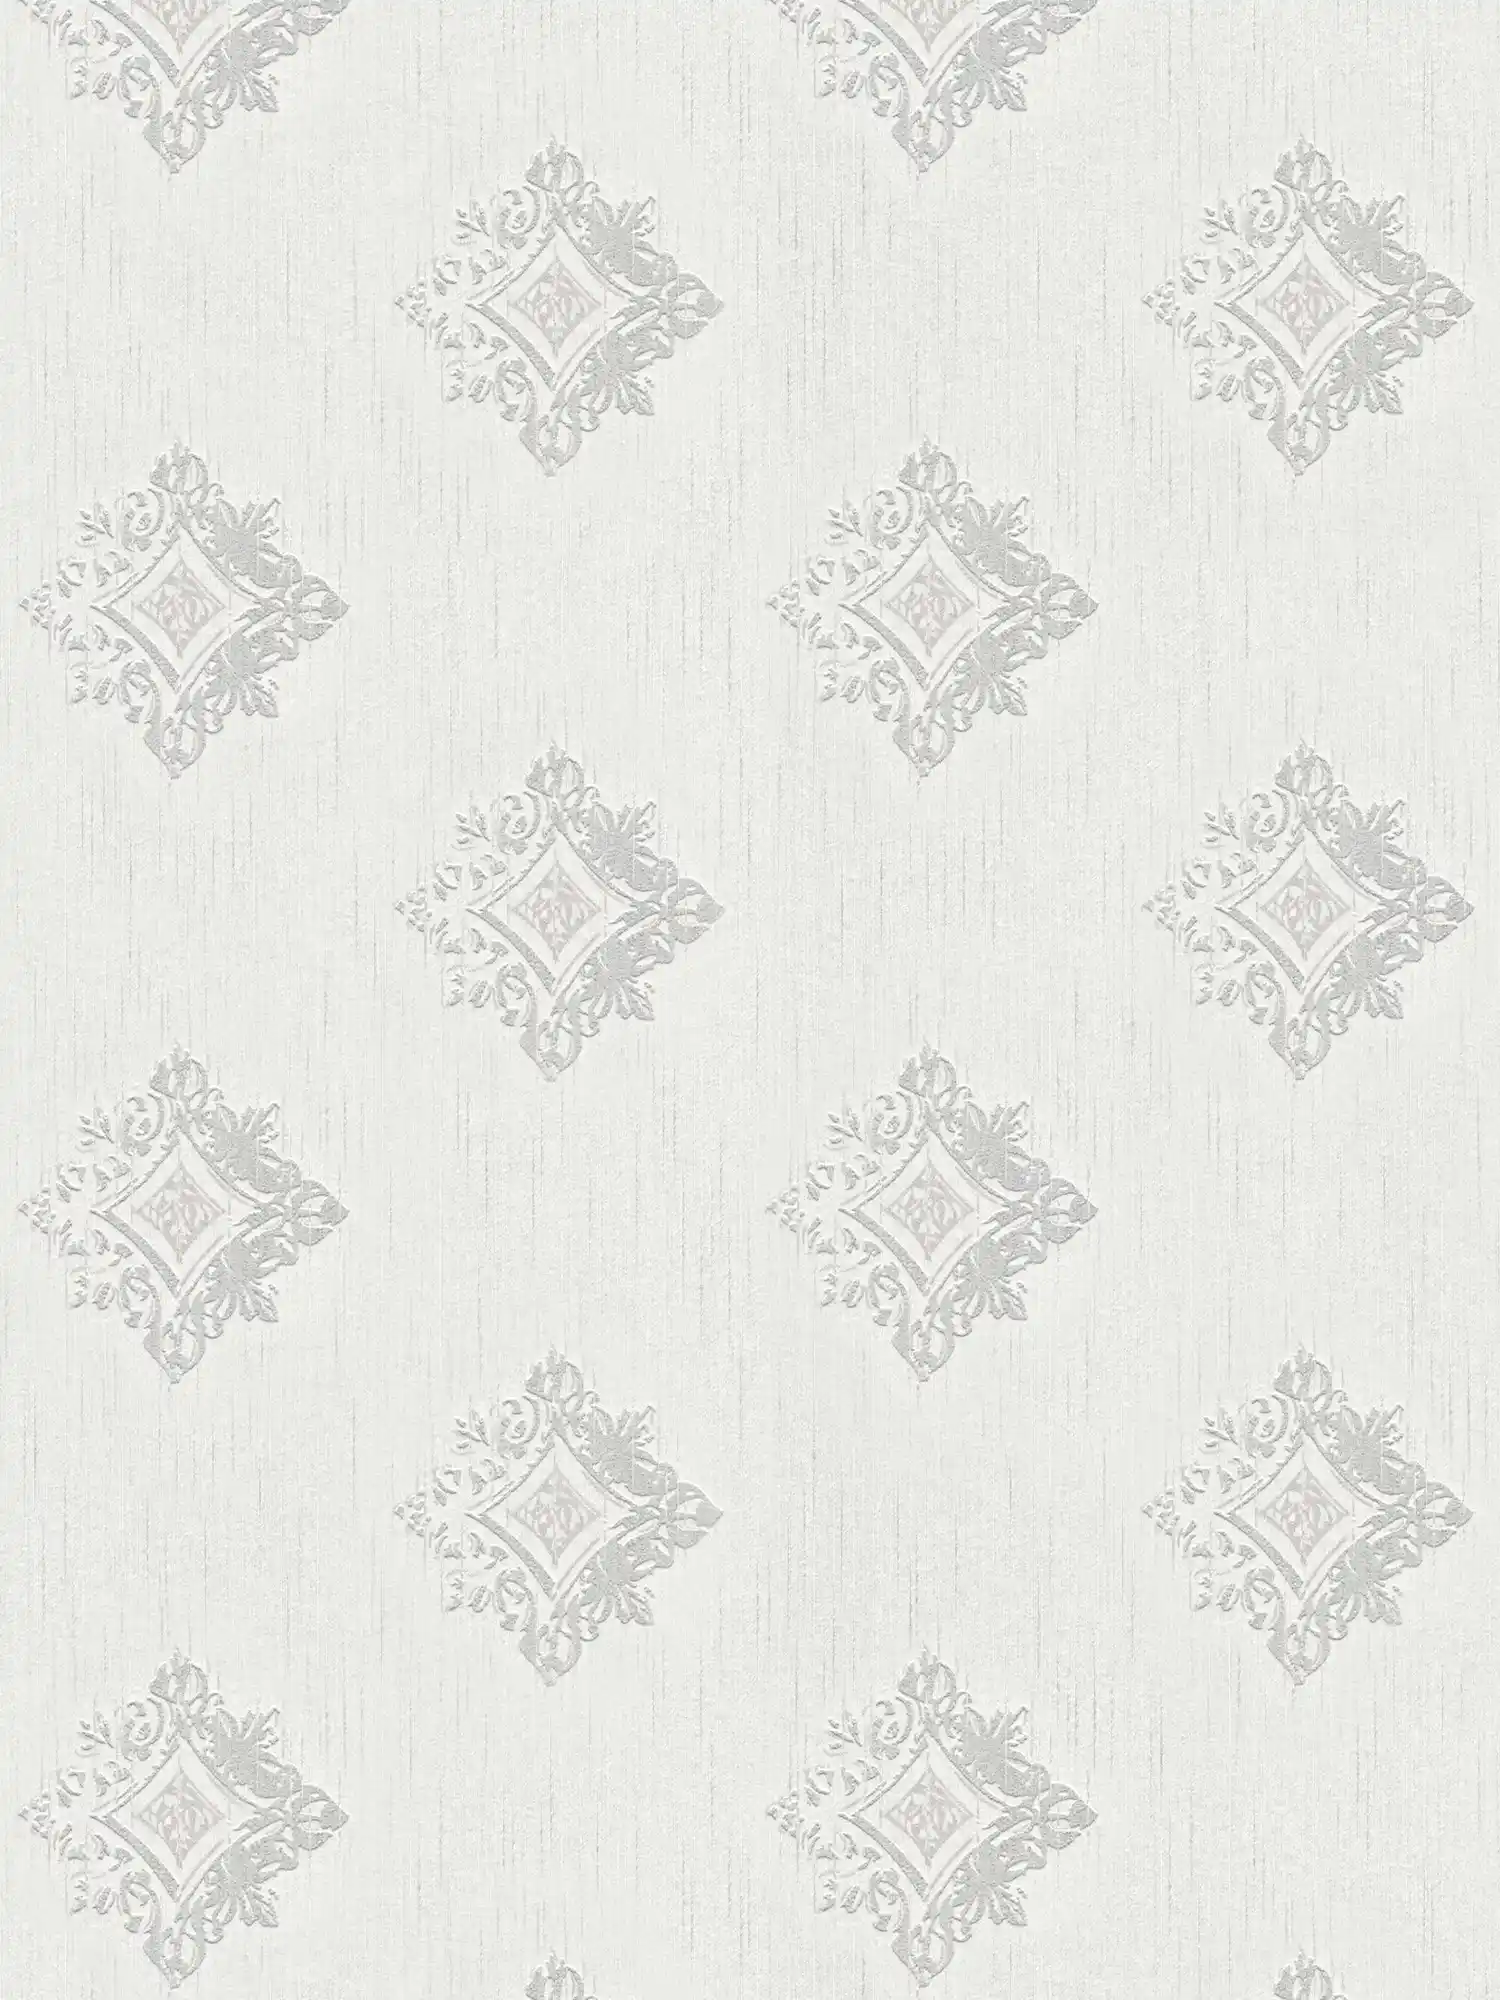         Vliestapete Putzoptik mit Stuck-Ornamenten & Rauten Muster – Grau, Weiß
    